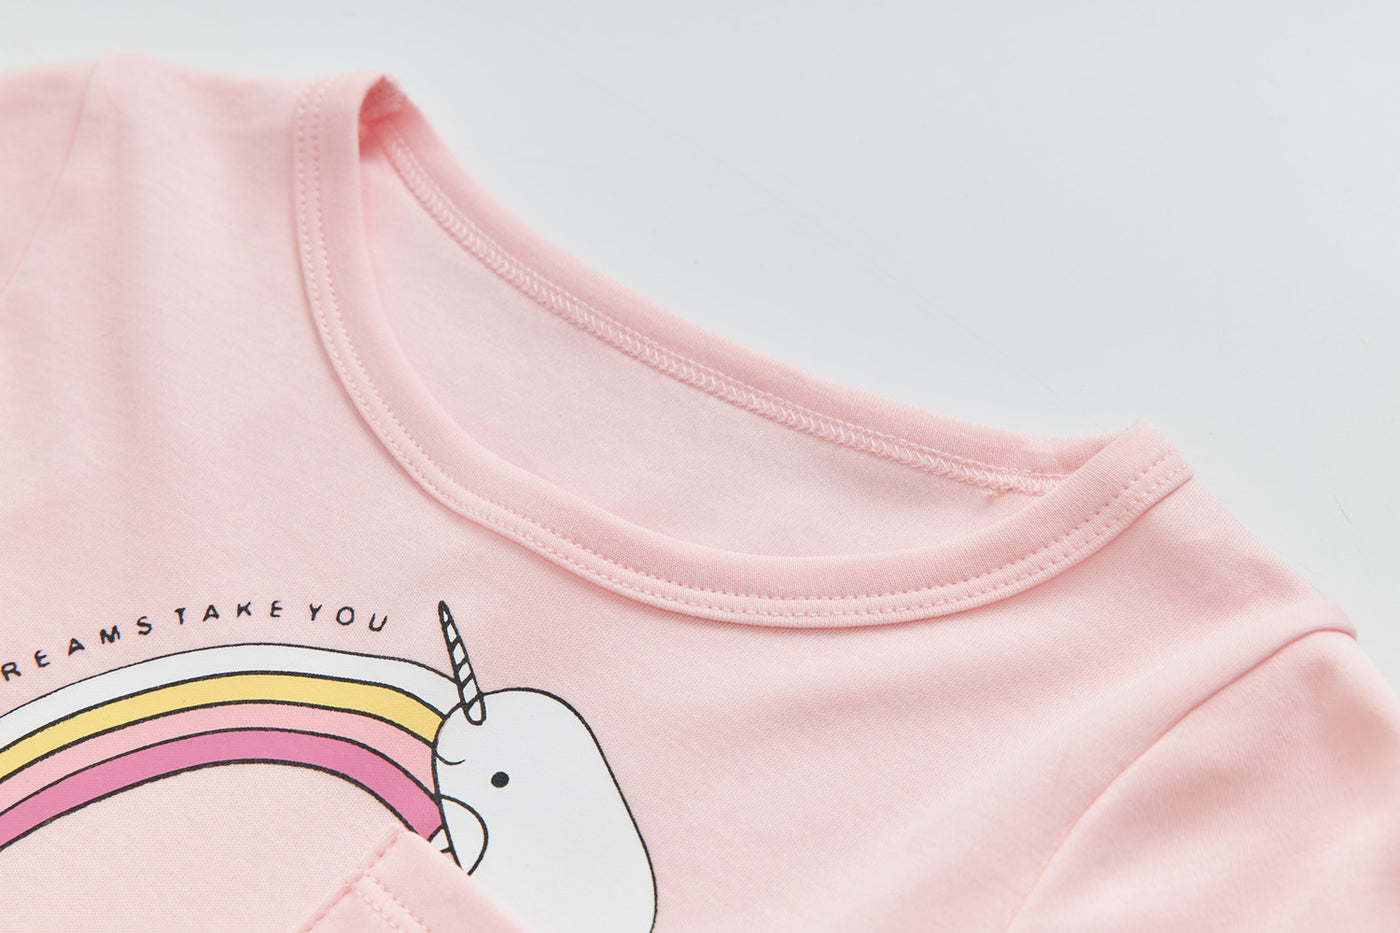 Baby Kids Pajamas Rainbow Unicorn Printed Top w Pink Stripe Pants Set - Little Kooma